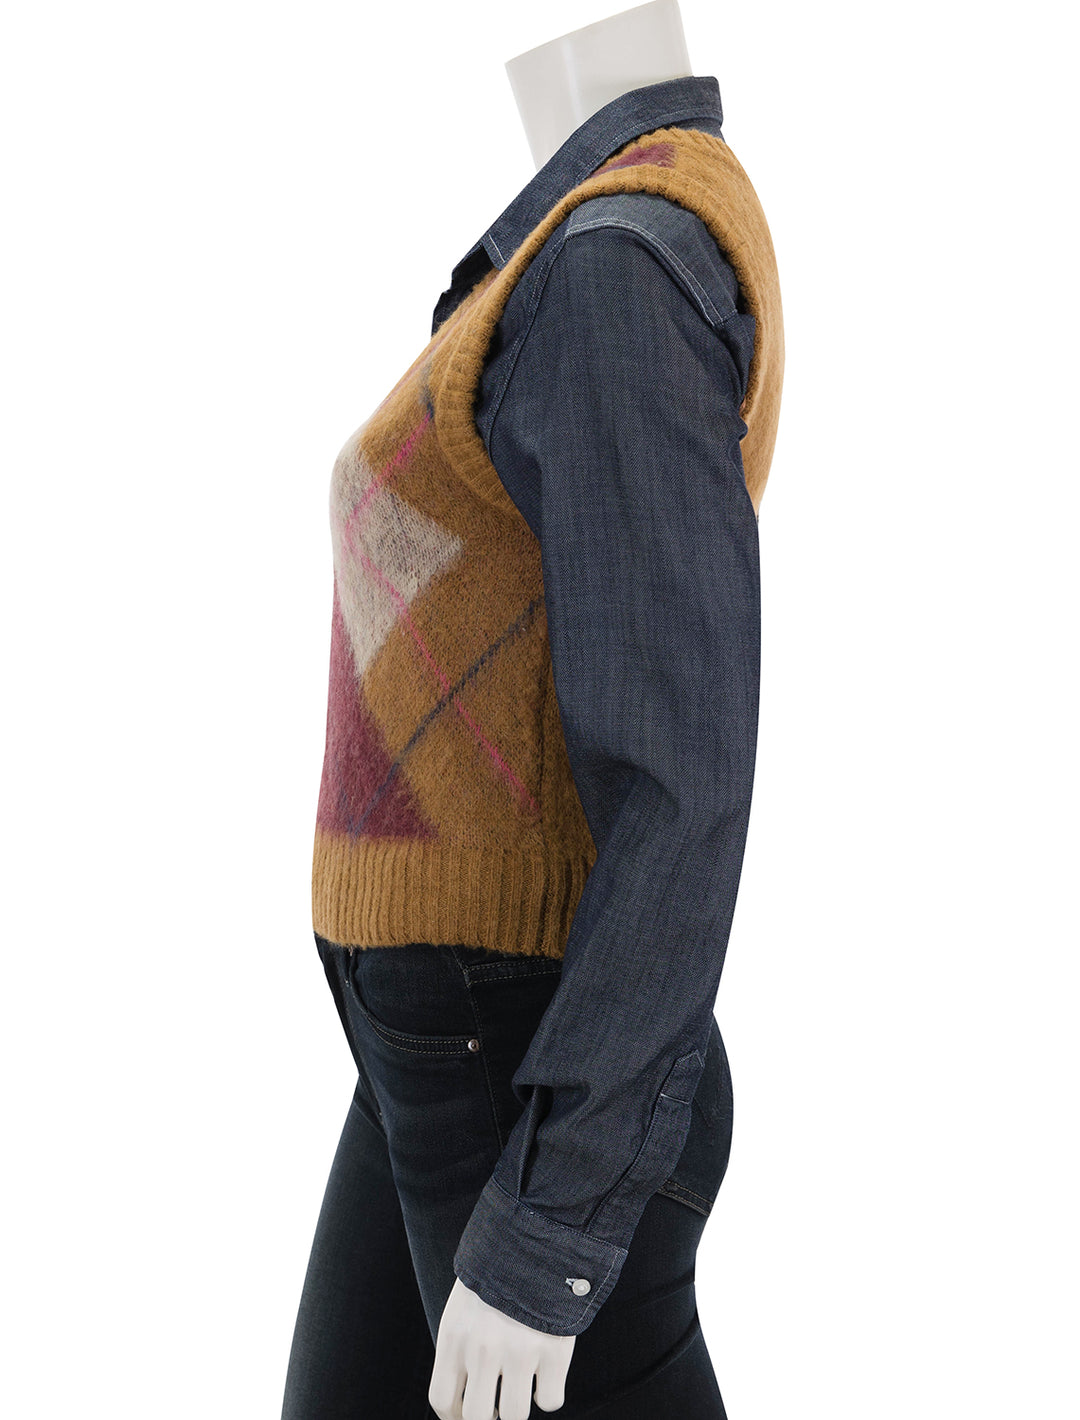 Side view of Steve Madden's ella sweater vest in tan argyle.